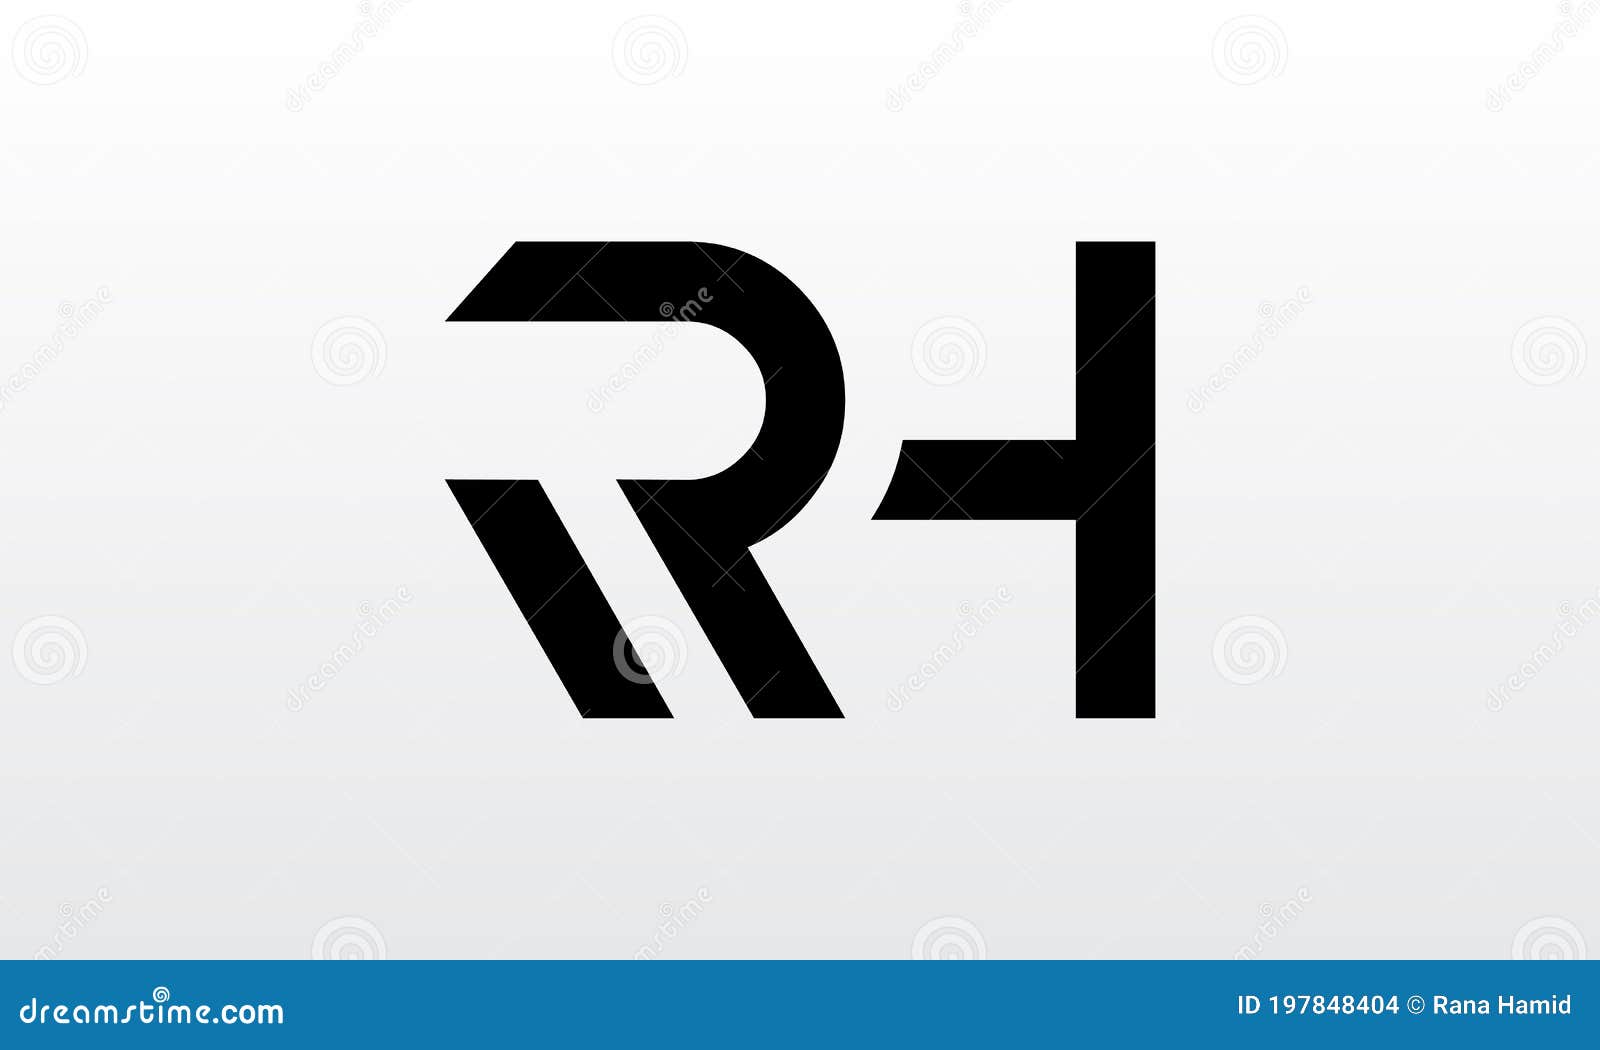 Rh Logo Cliparts, Stock Vector and Royalty Free Rh Logo Illustrations